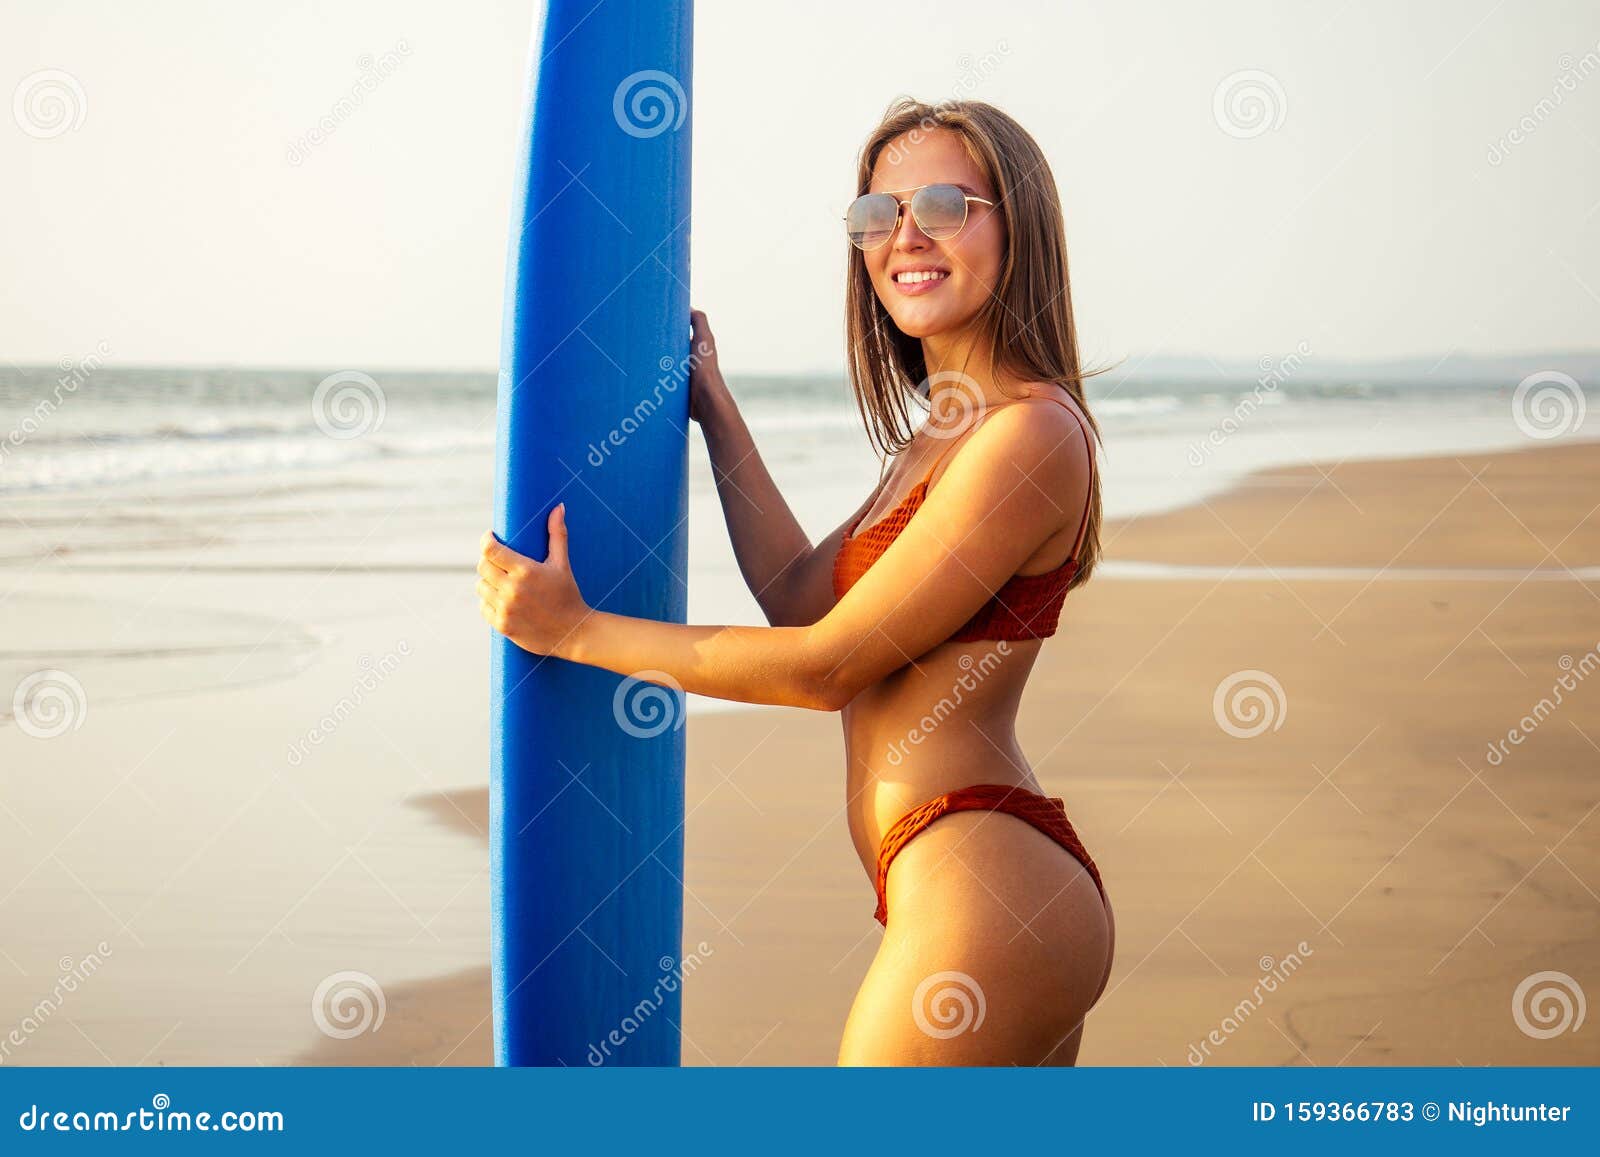 Models Beach Surf